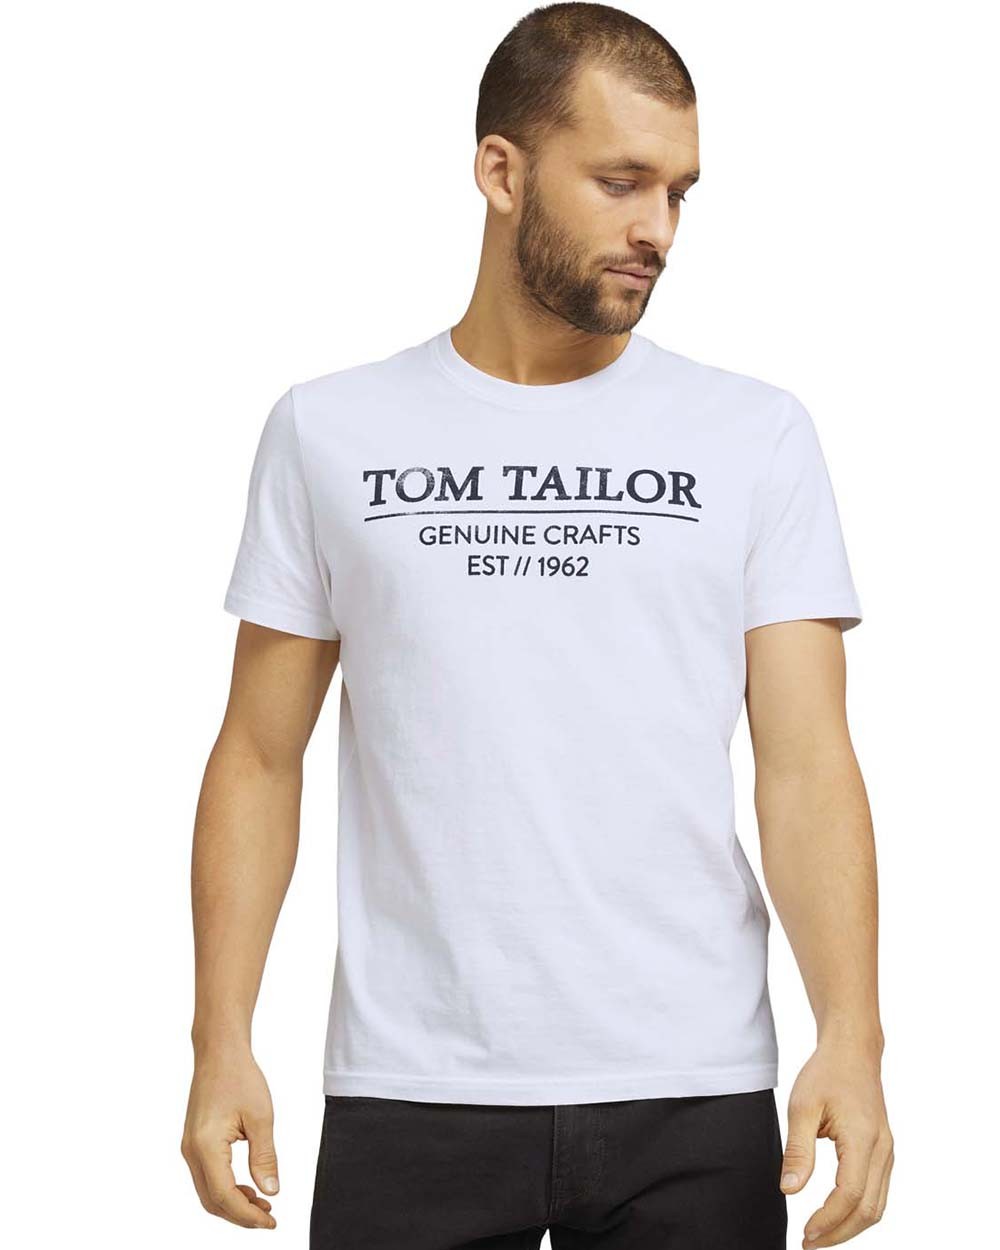 TAILOR - 1021229 - TOM T-shirt